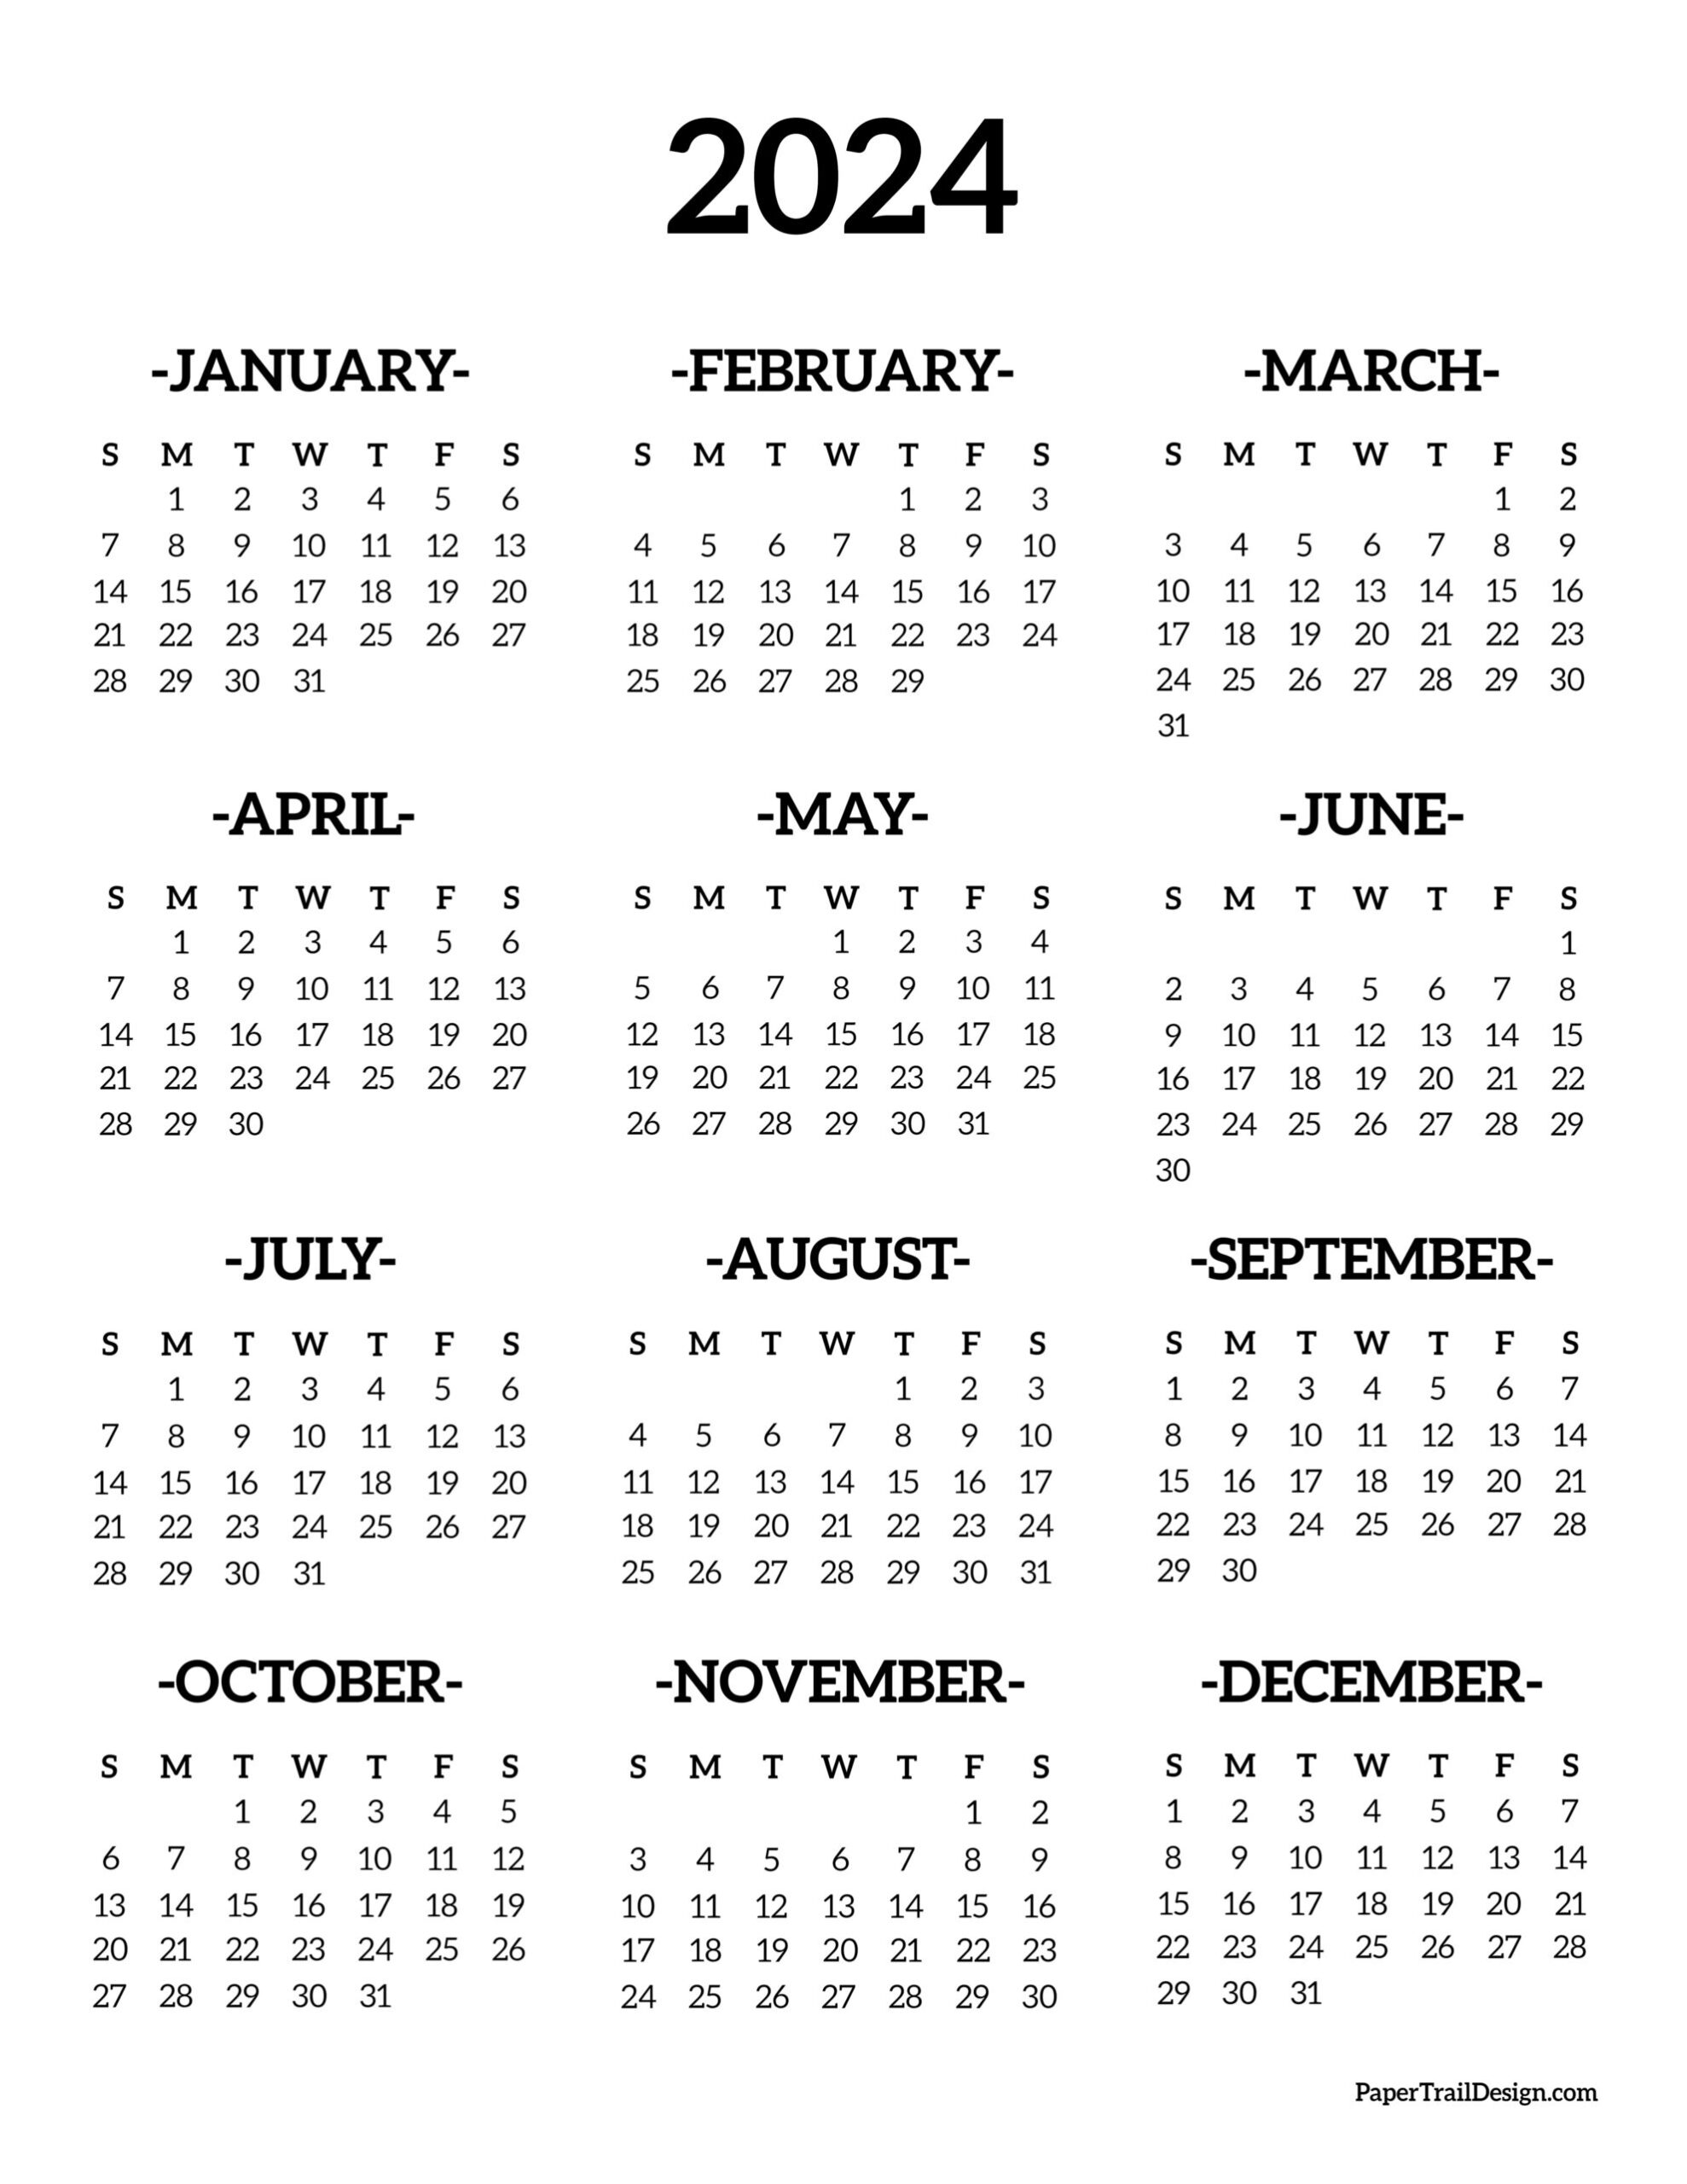 Calendar 2024 Printable One Page - Paper Trail Design | Free Printable 2024 Calendar